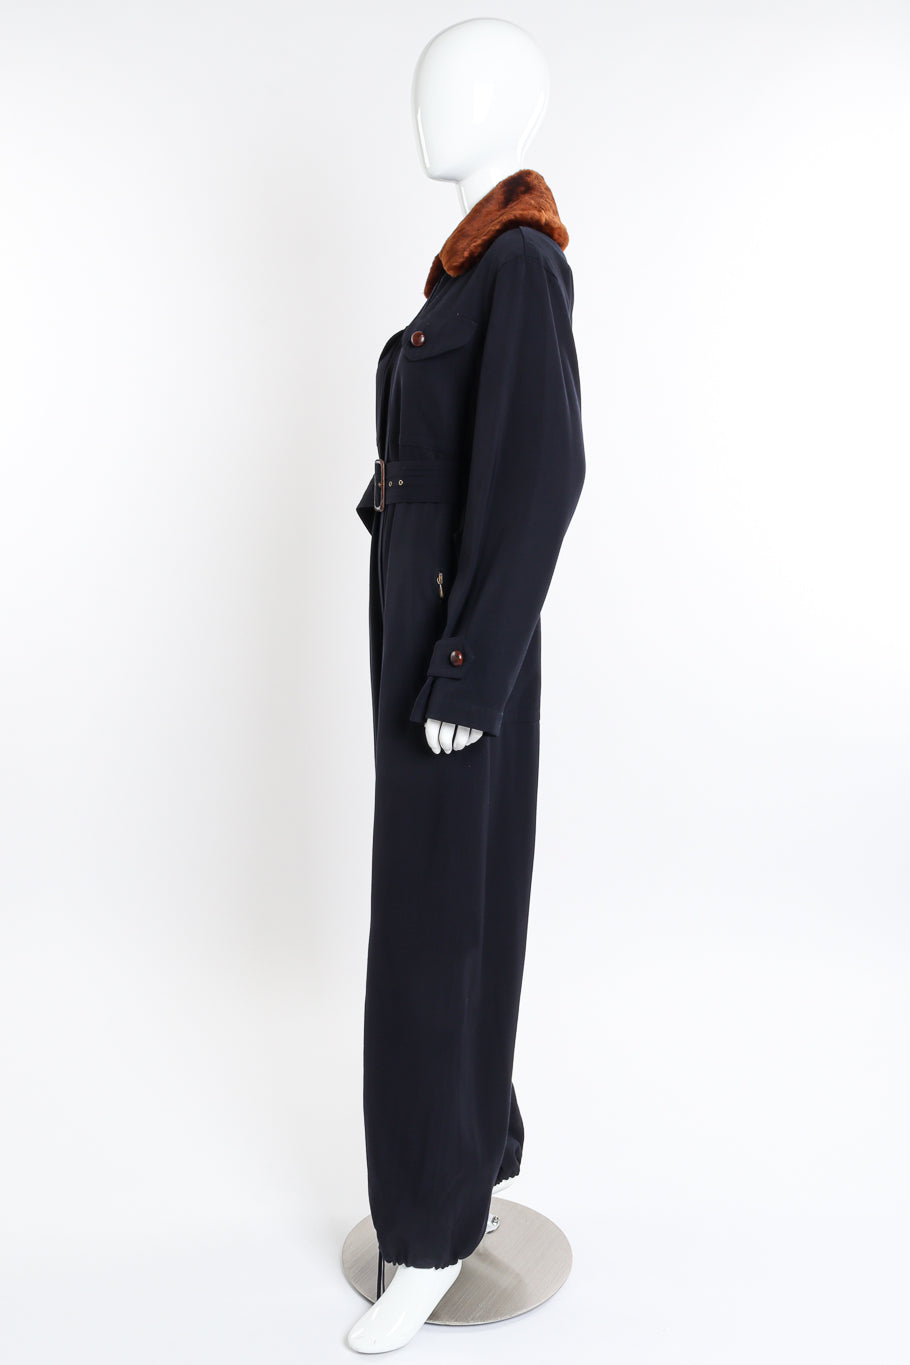 Jean Paul Gaultier Femme Fur Trim Flight Suit side on mannequin @recessla